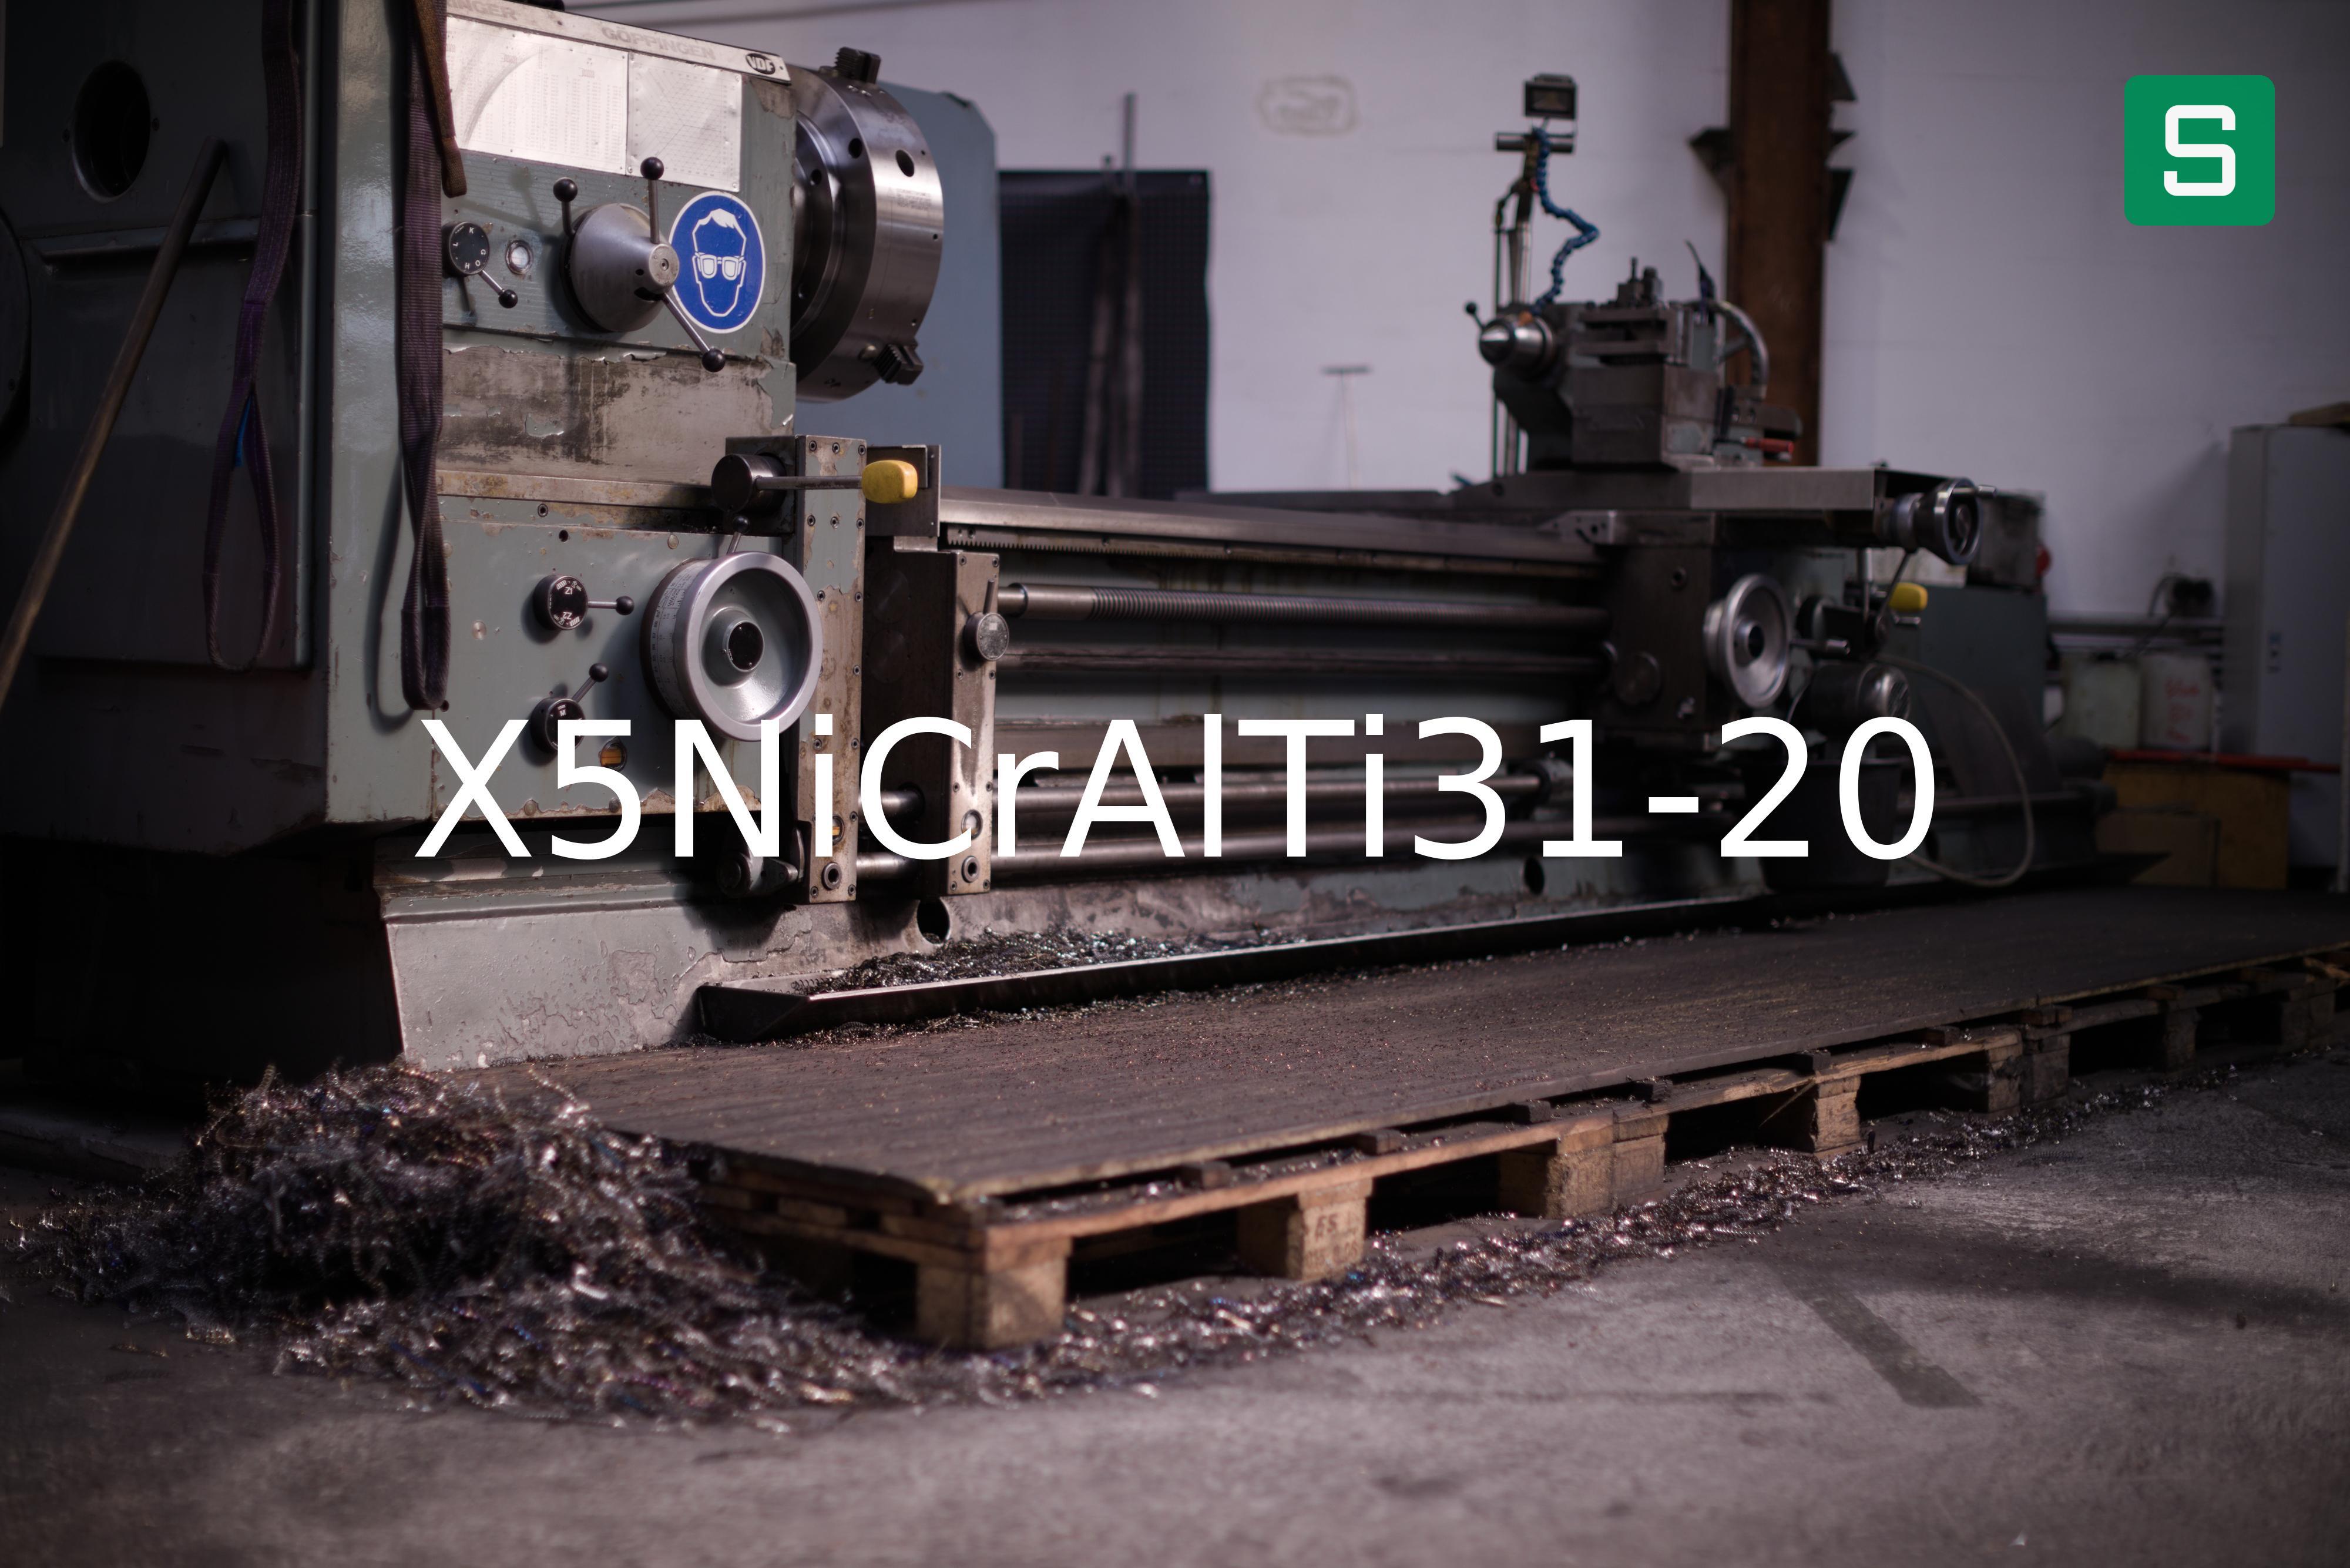 Stahlwerkstoff: X5NiCrAlTi31-20